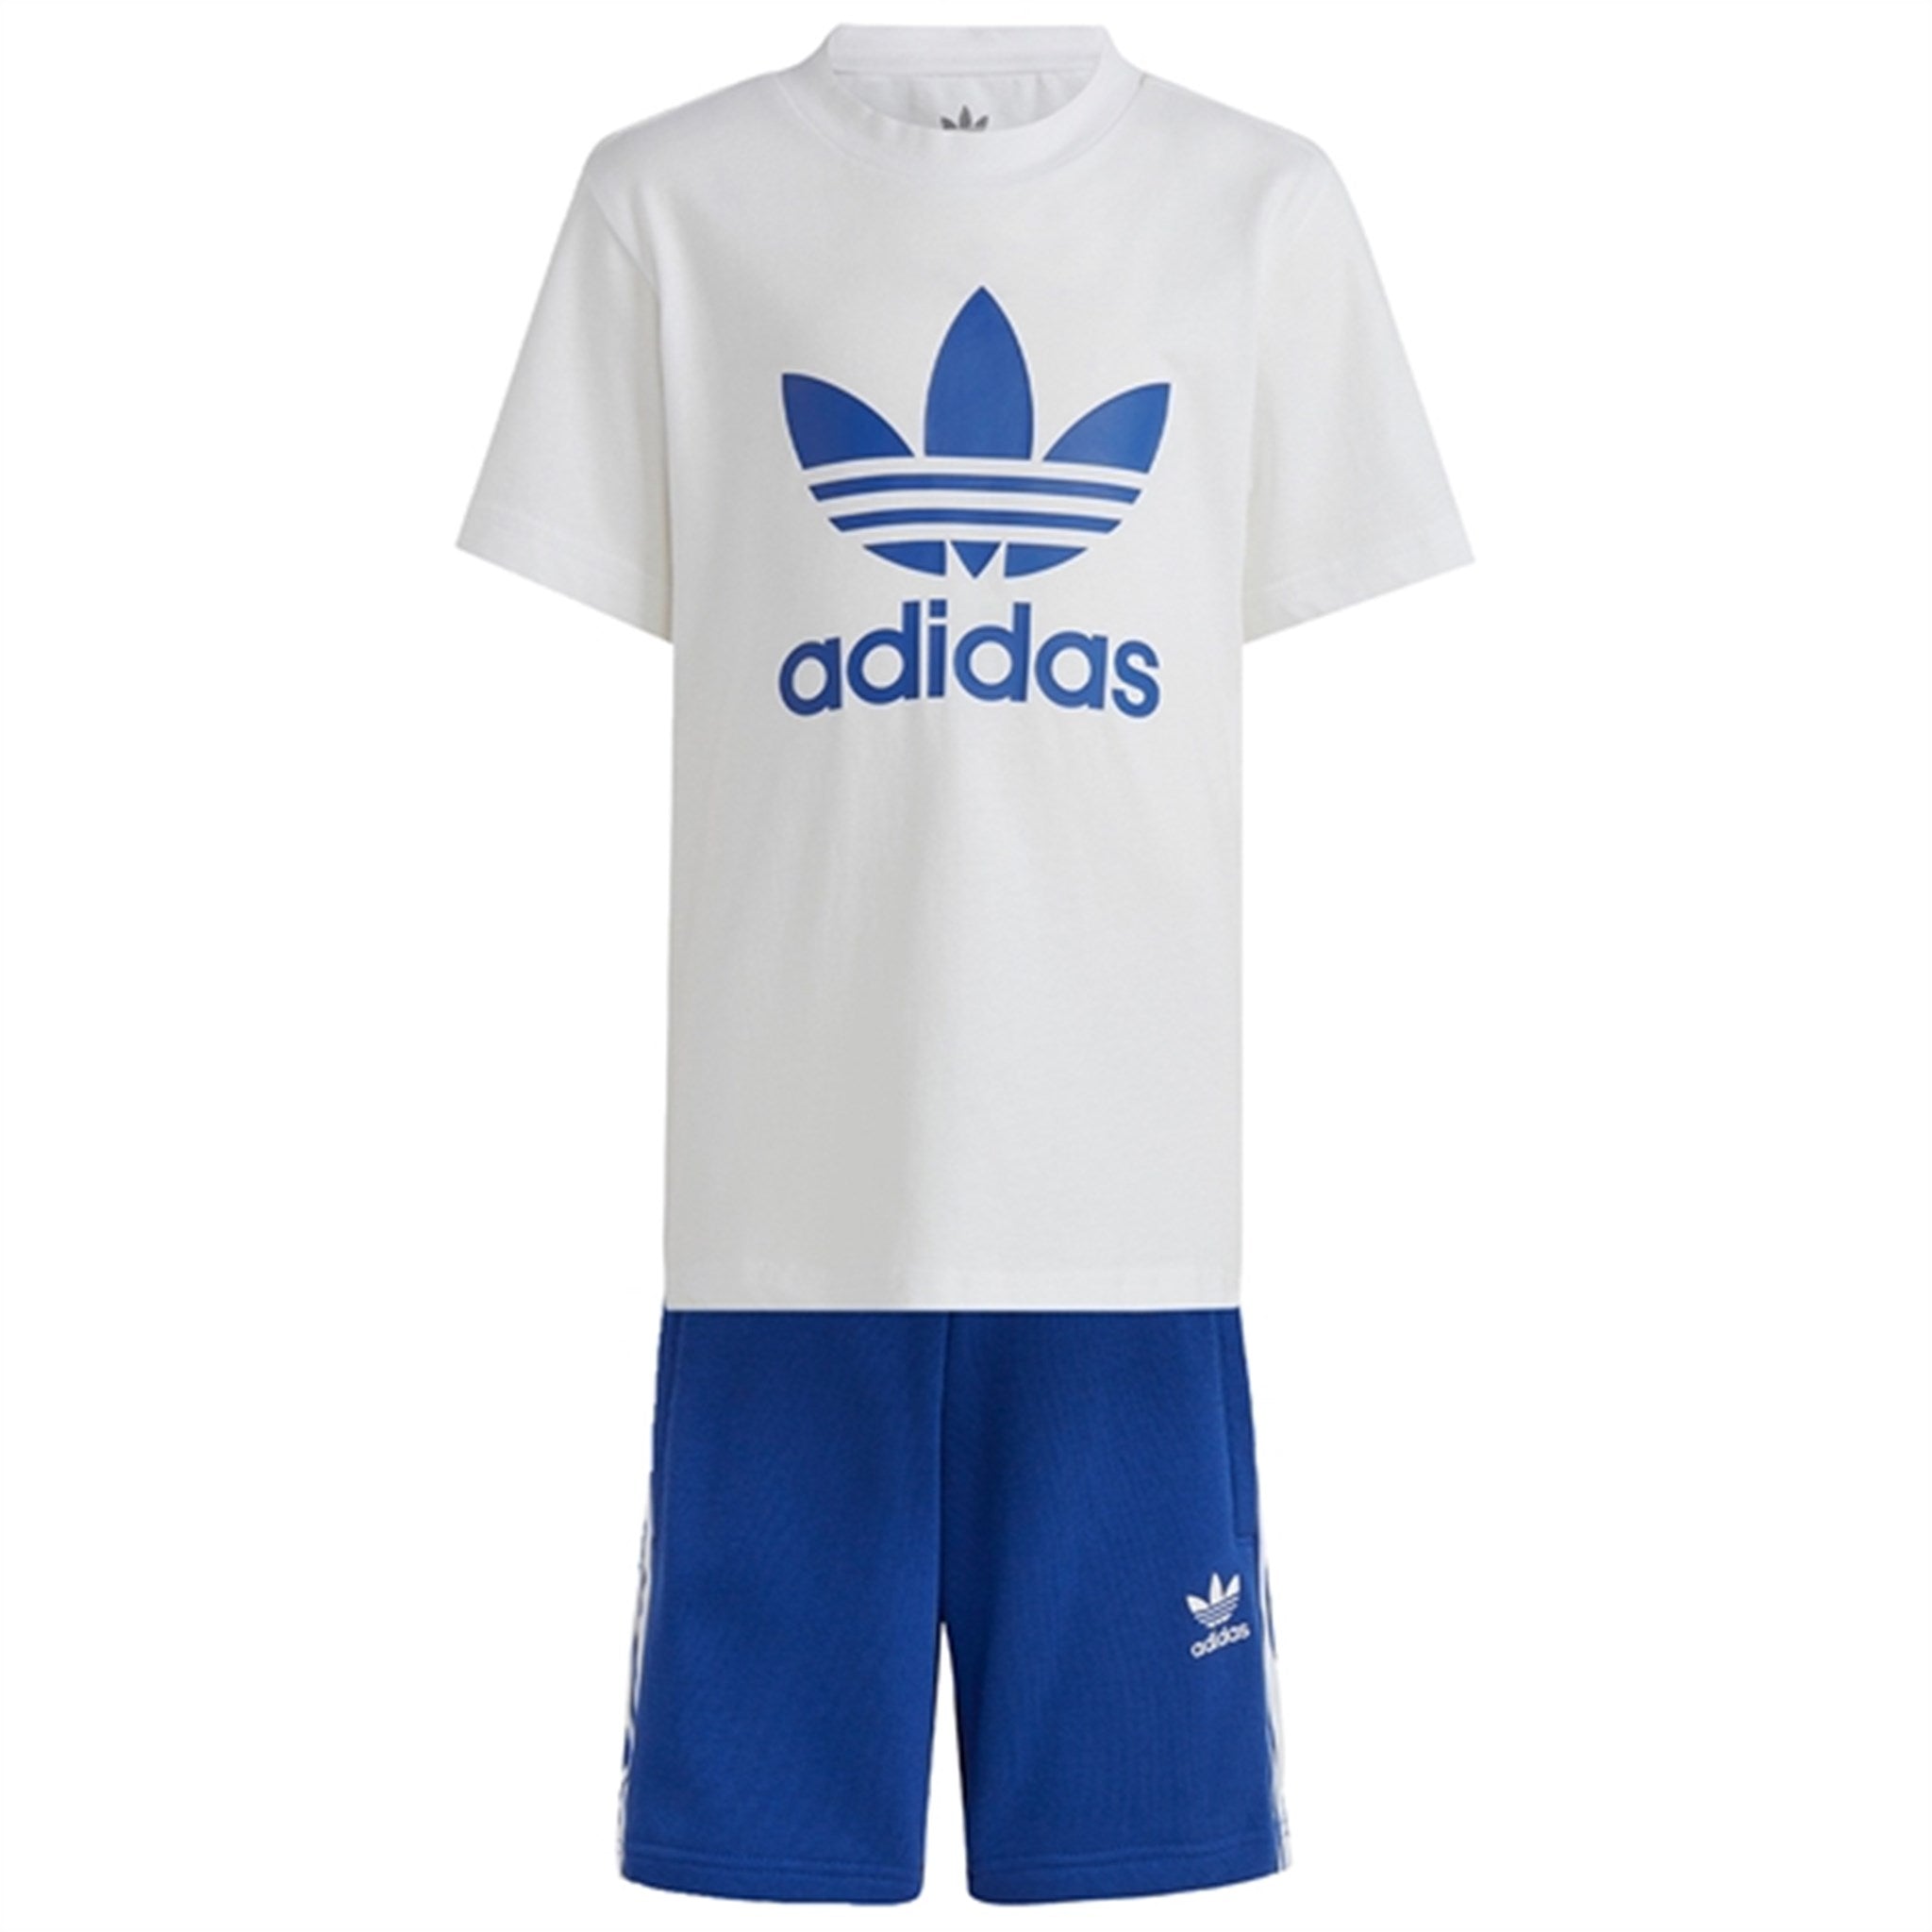 adidas Originals White / Blue Shorts Tee Sett